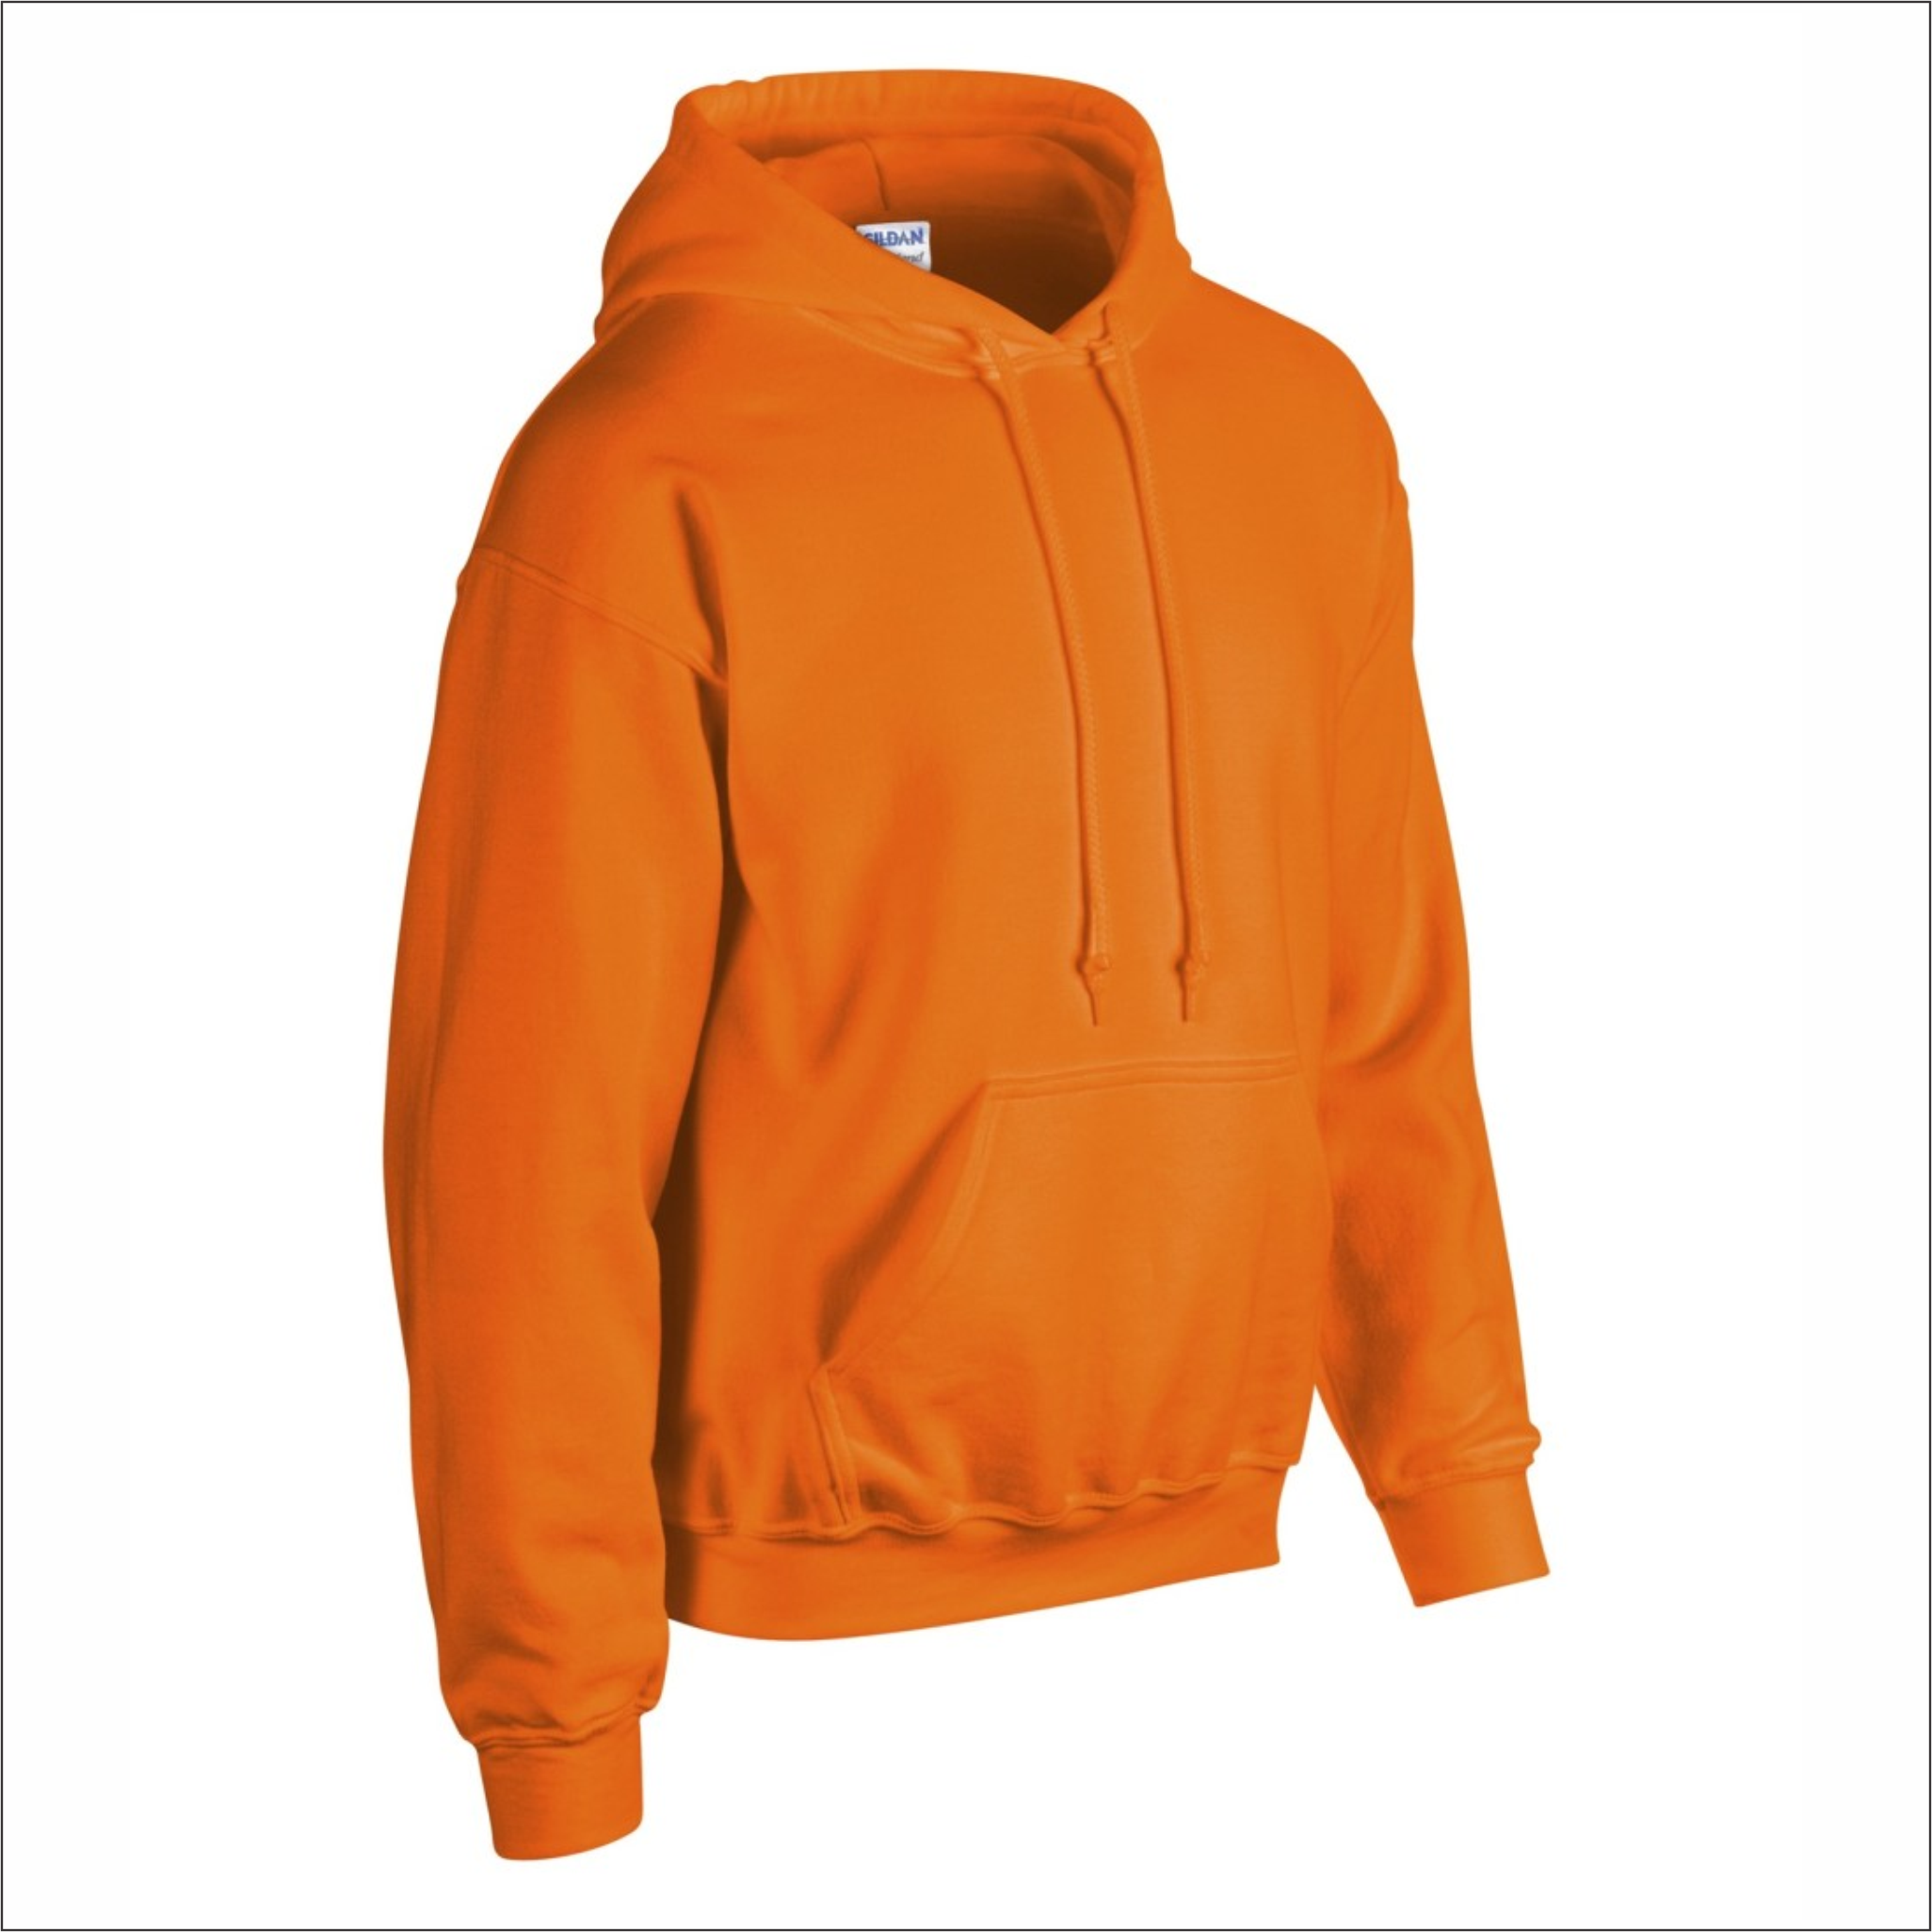 Adult Hoodie Safety Orange - Cotton - Gildan 18500